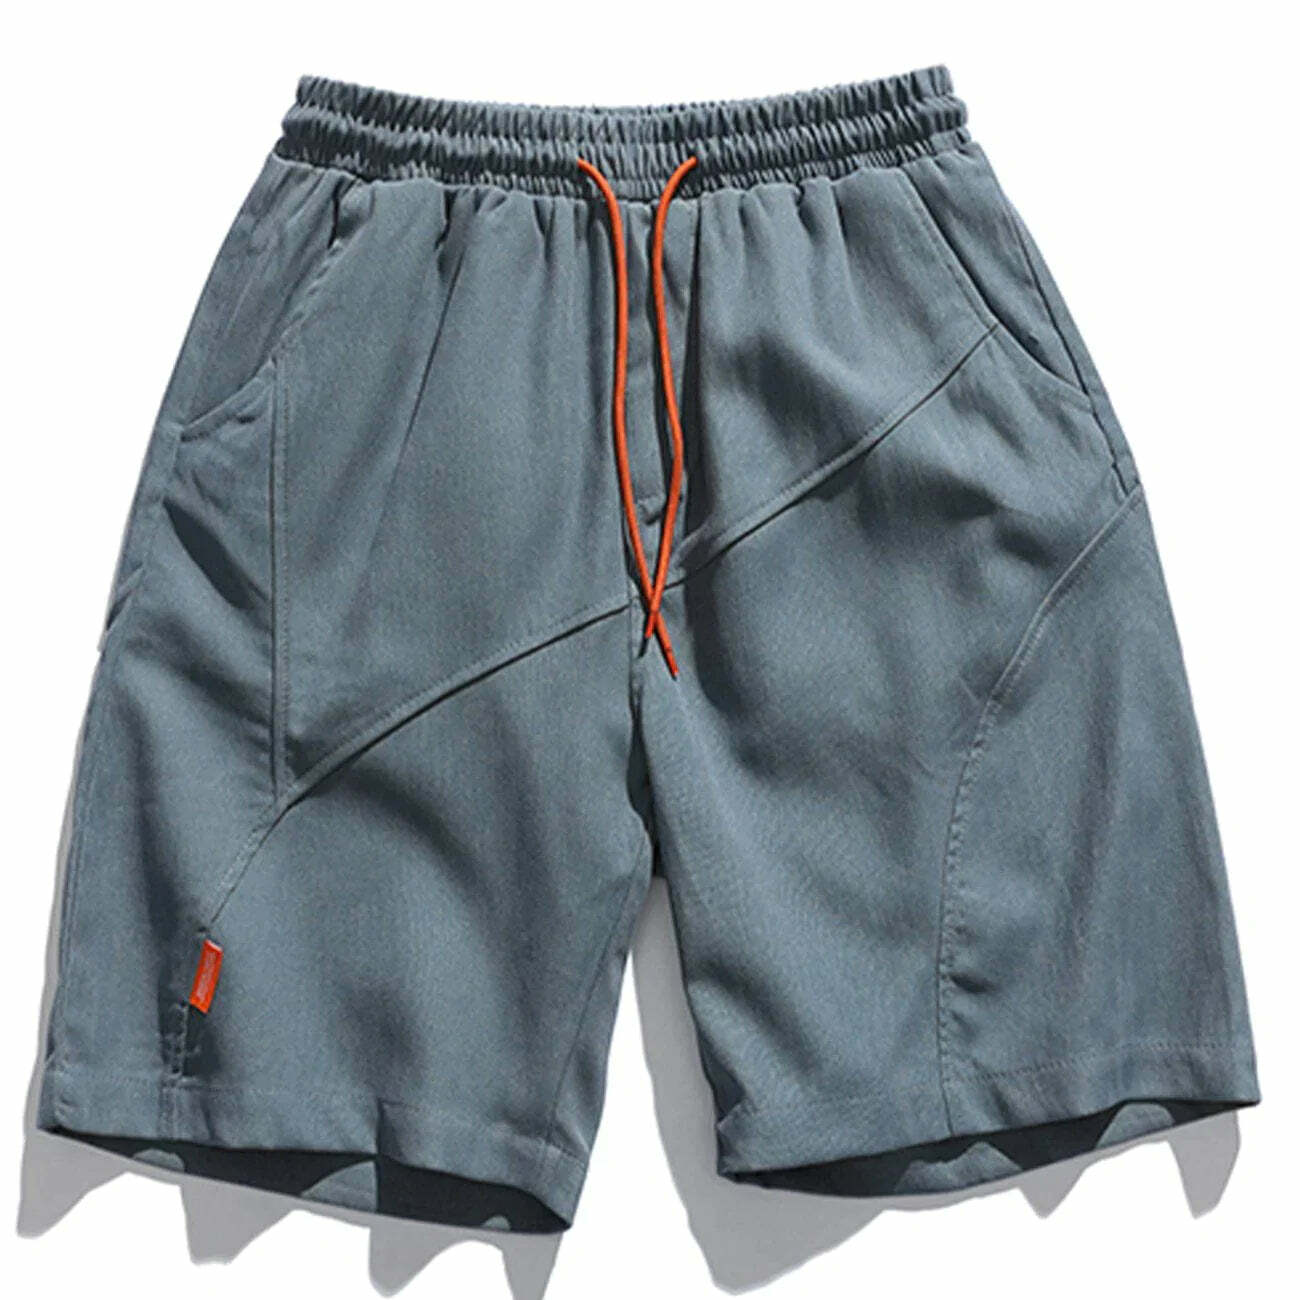 solid panel shorts minimalist streetwear essential 7130